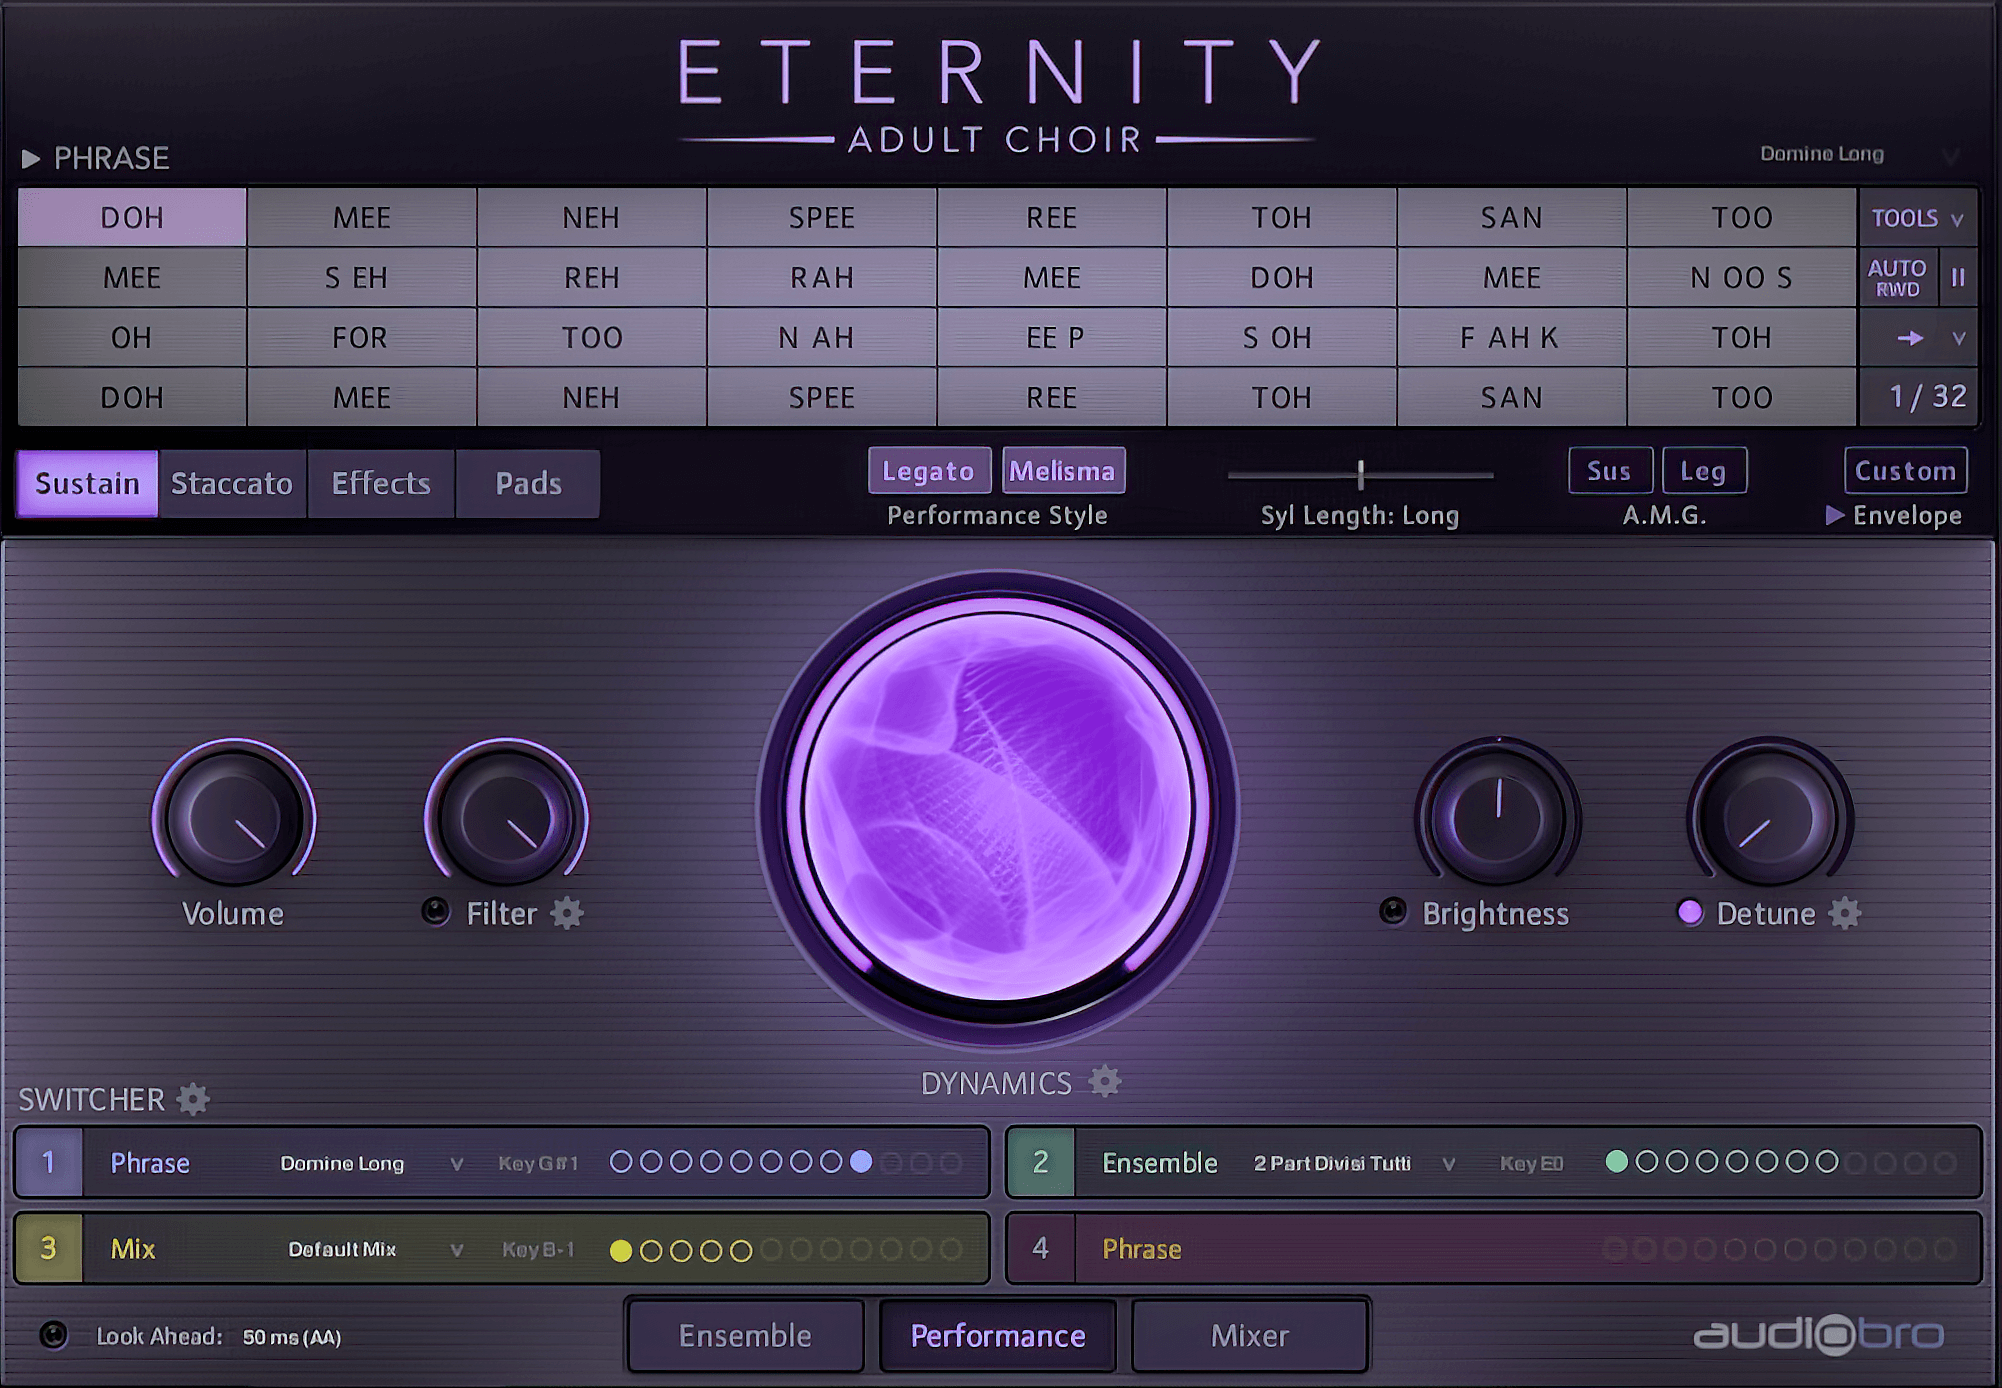 Eternity UI interface